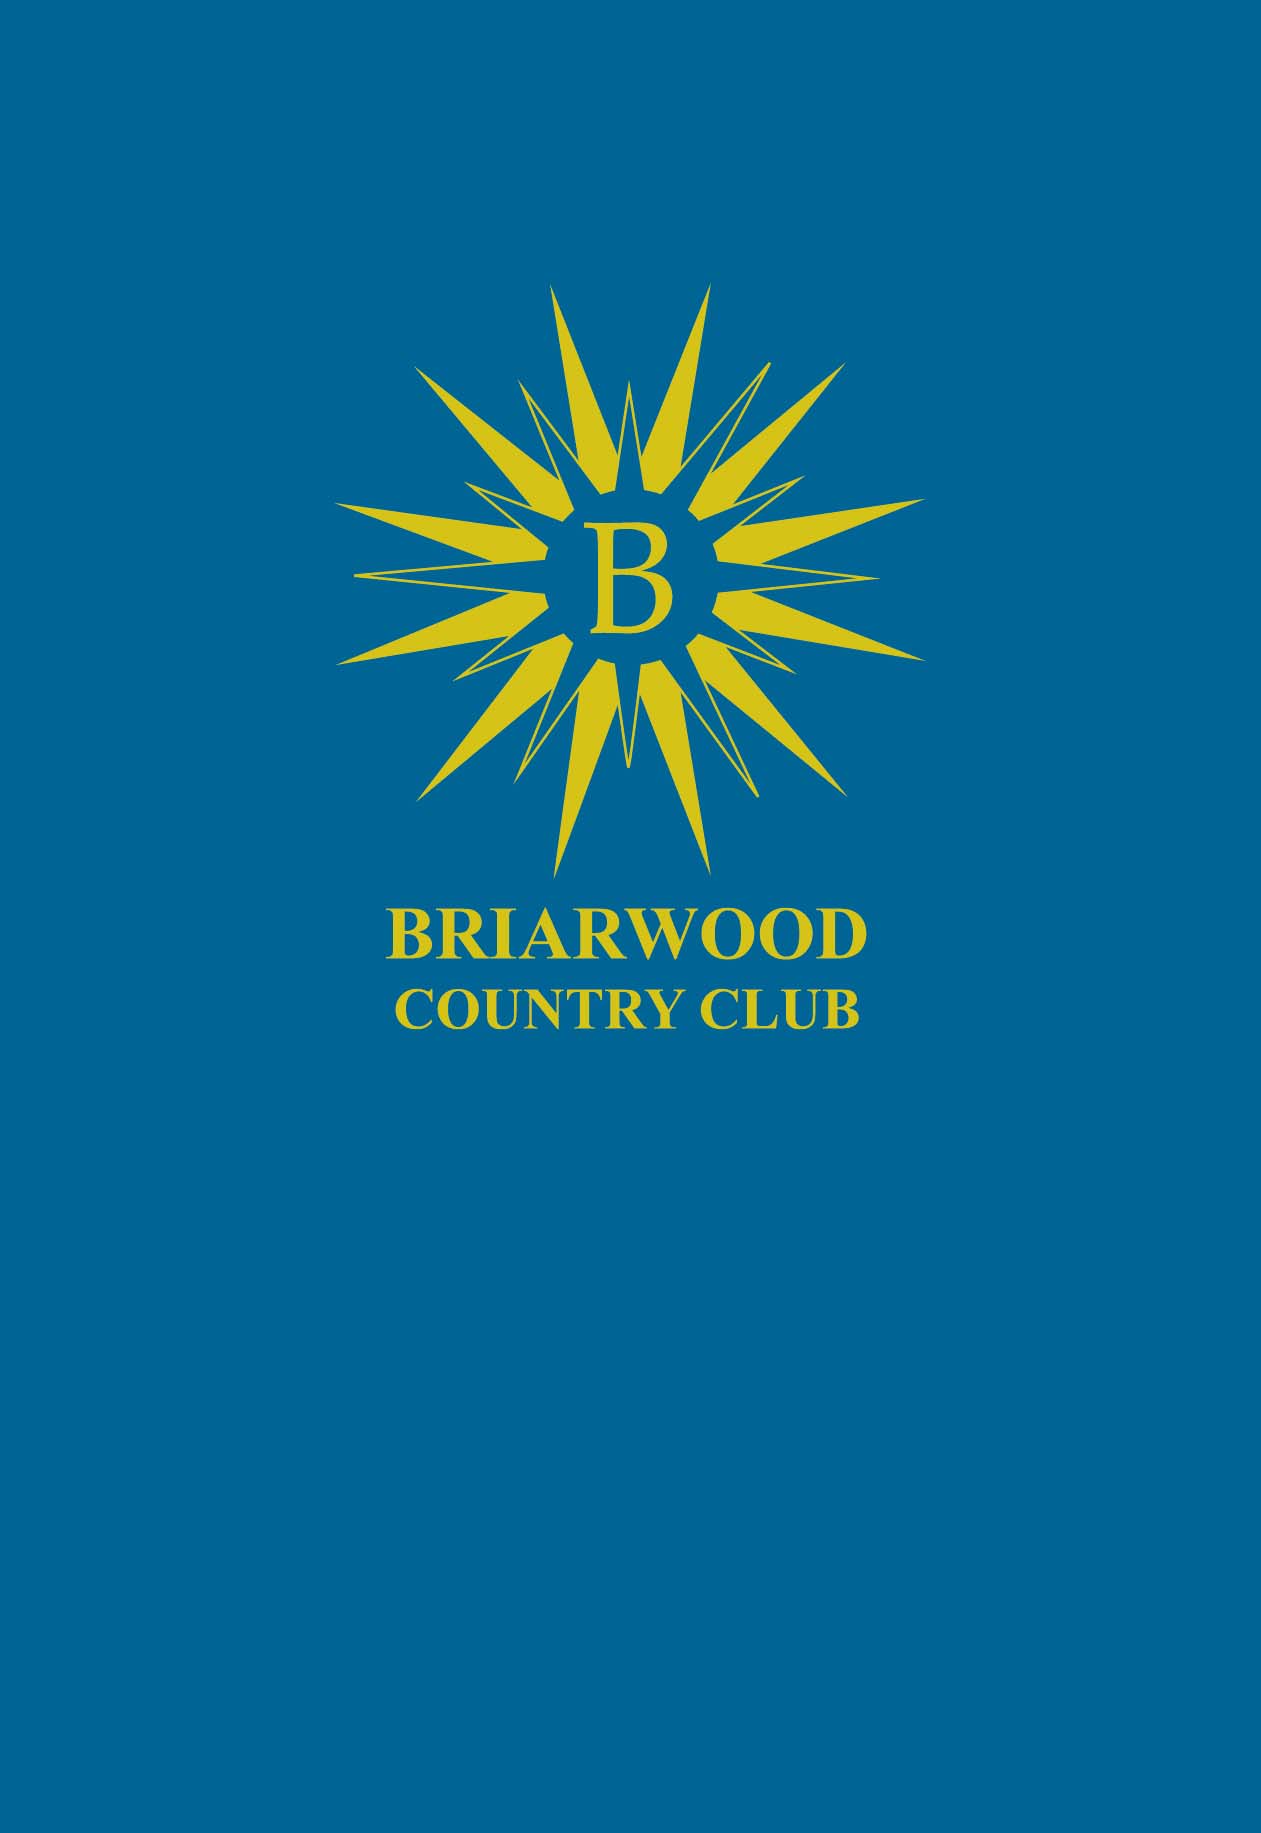 Briarwood CC